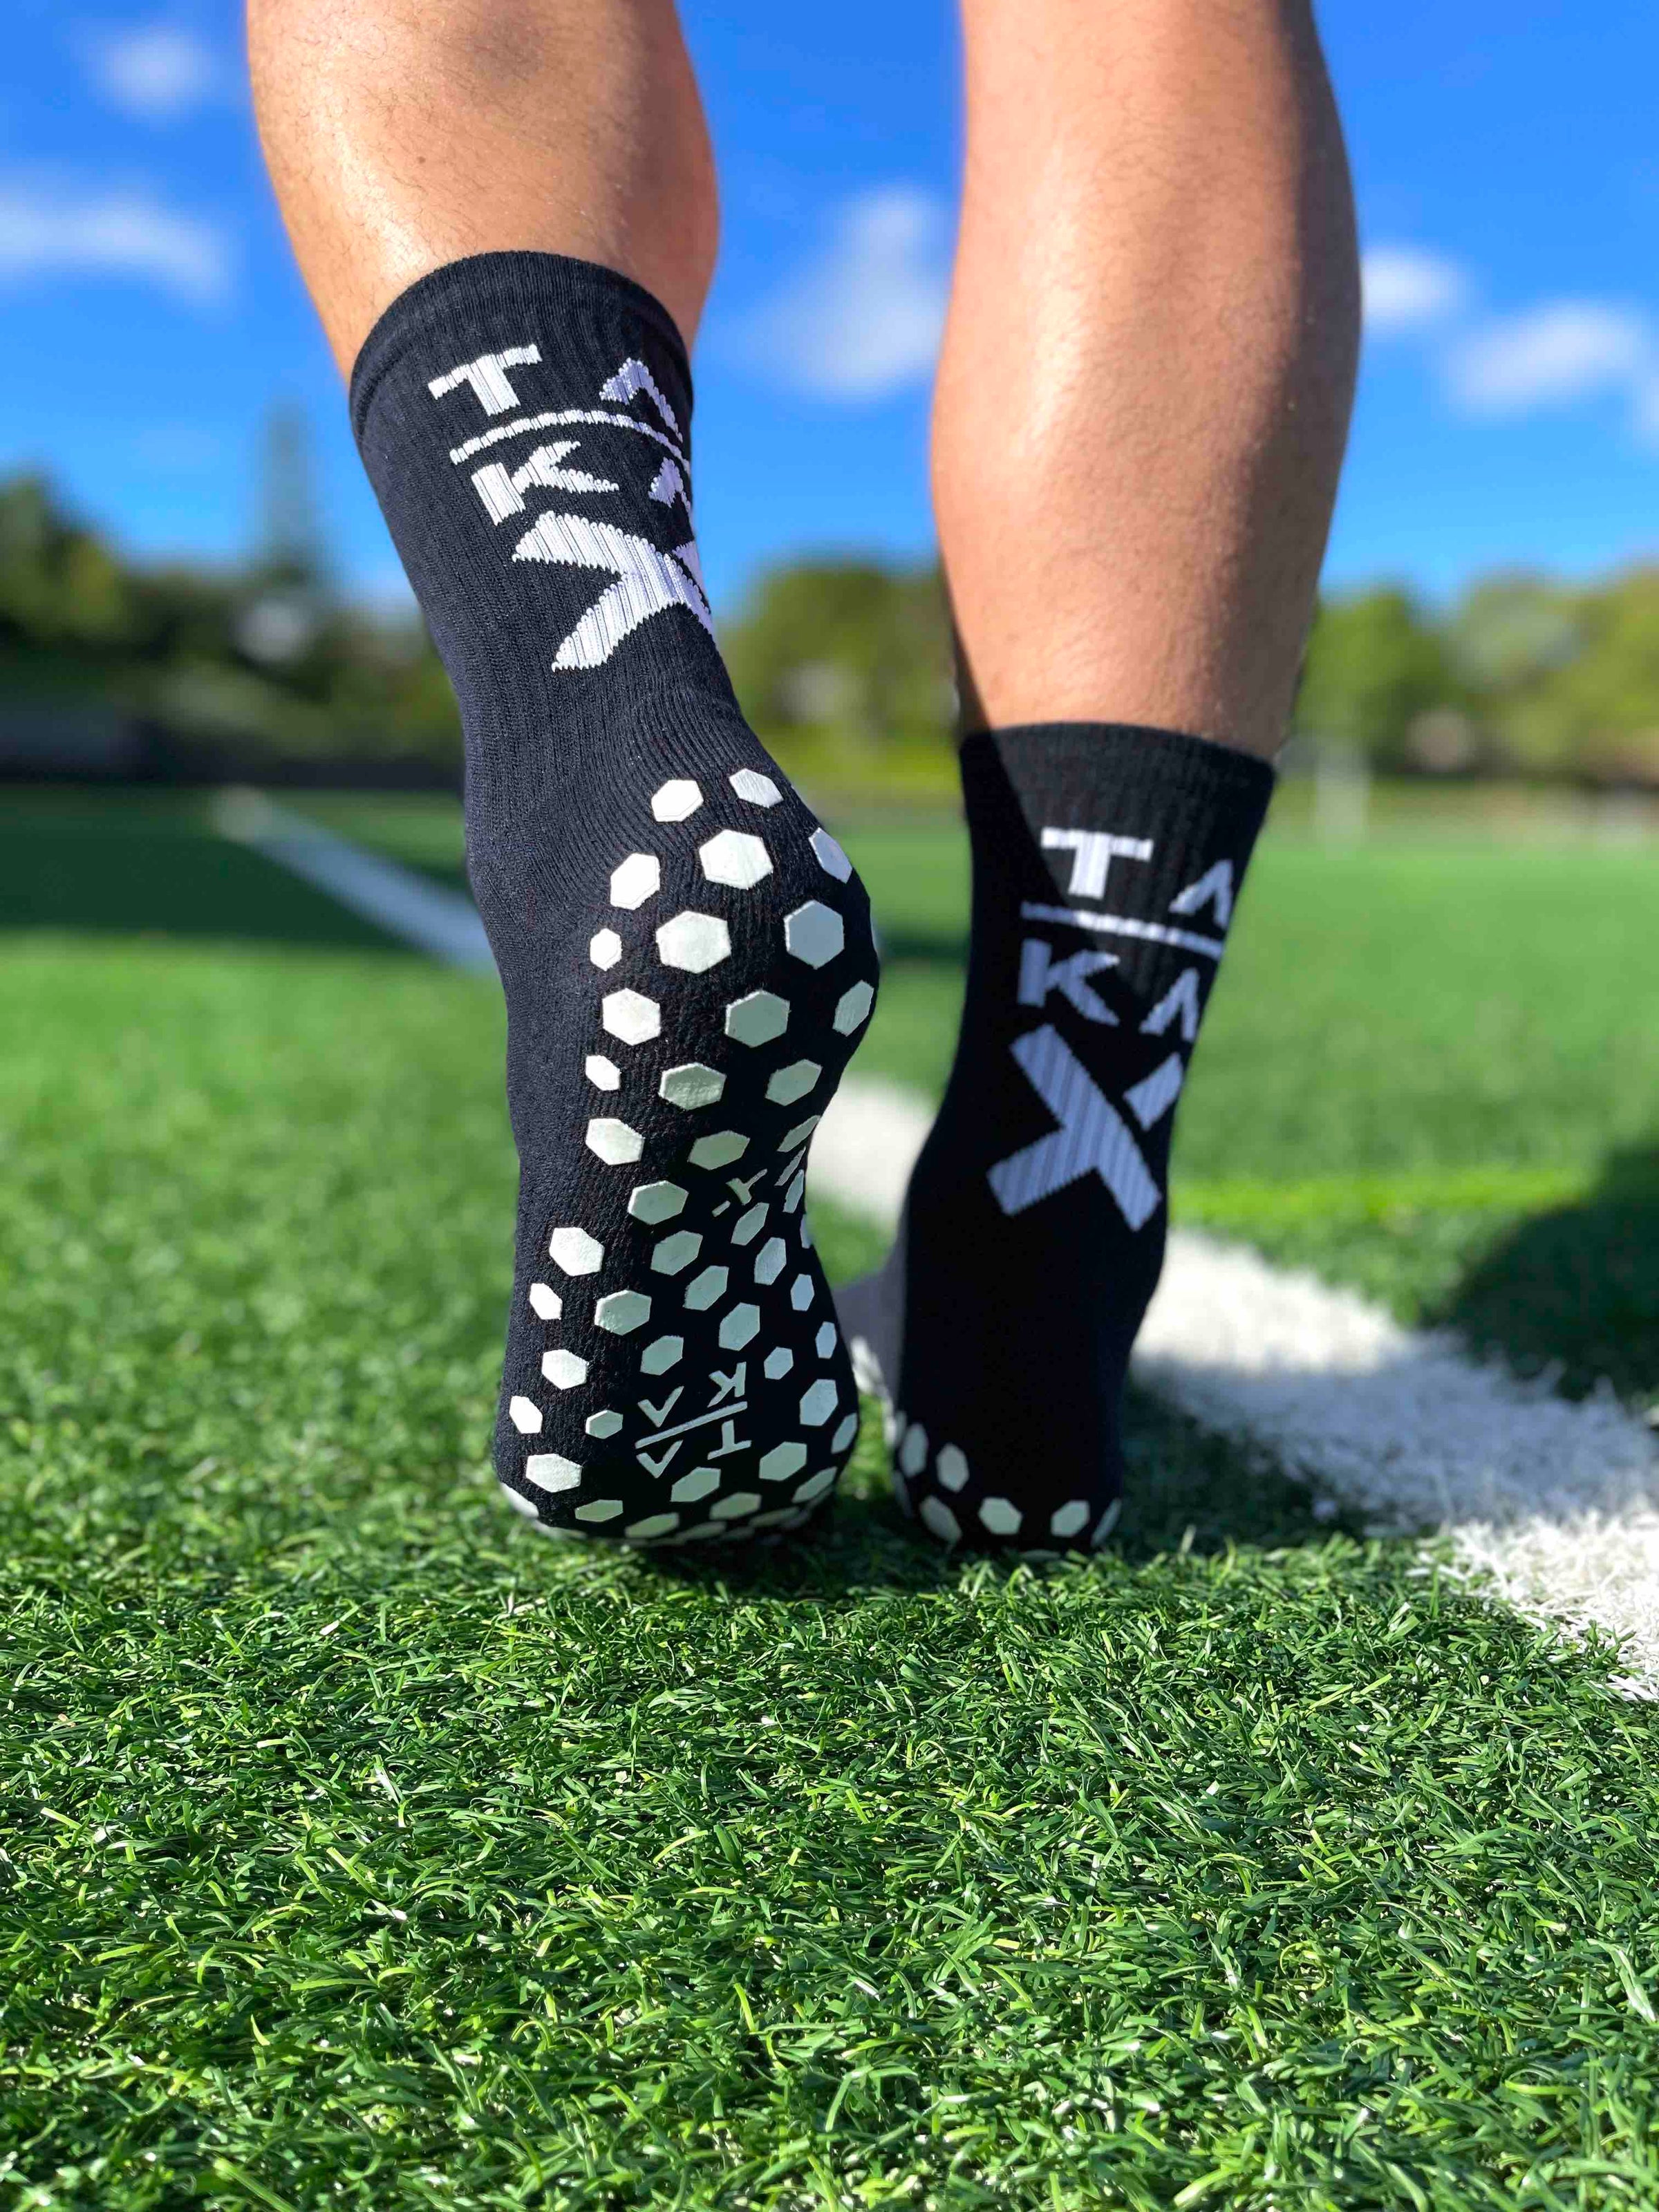 Soccer Grip Socks – Advantage Goalkeeping, Grip Socks 